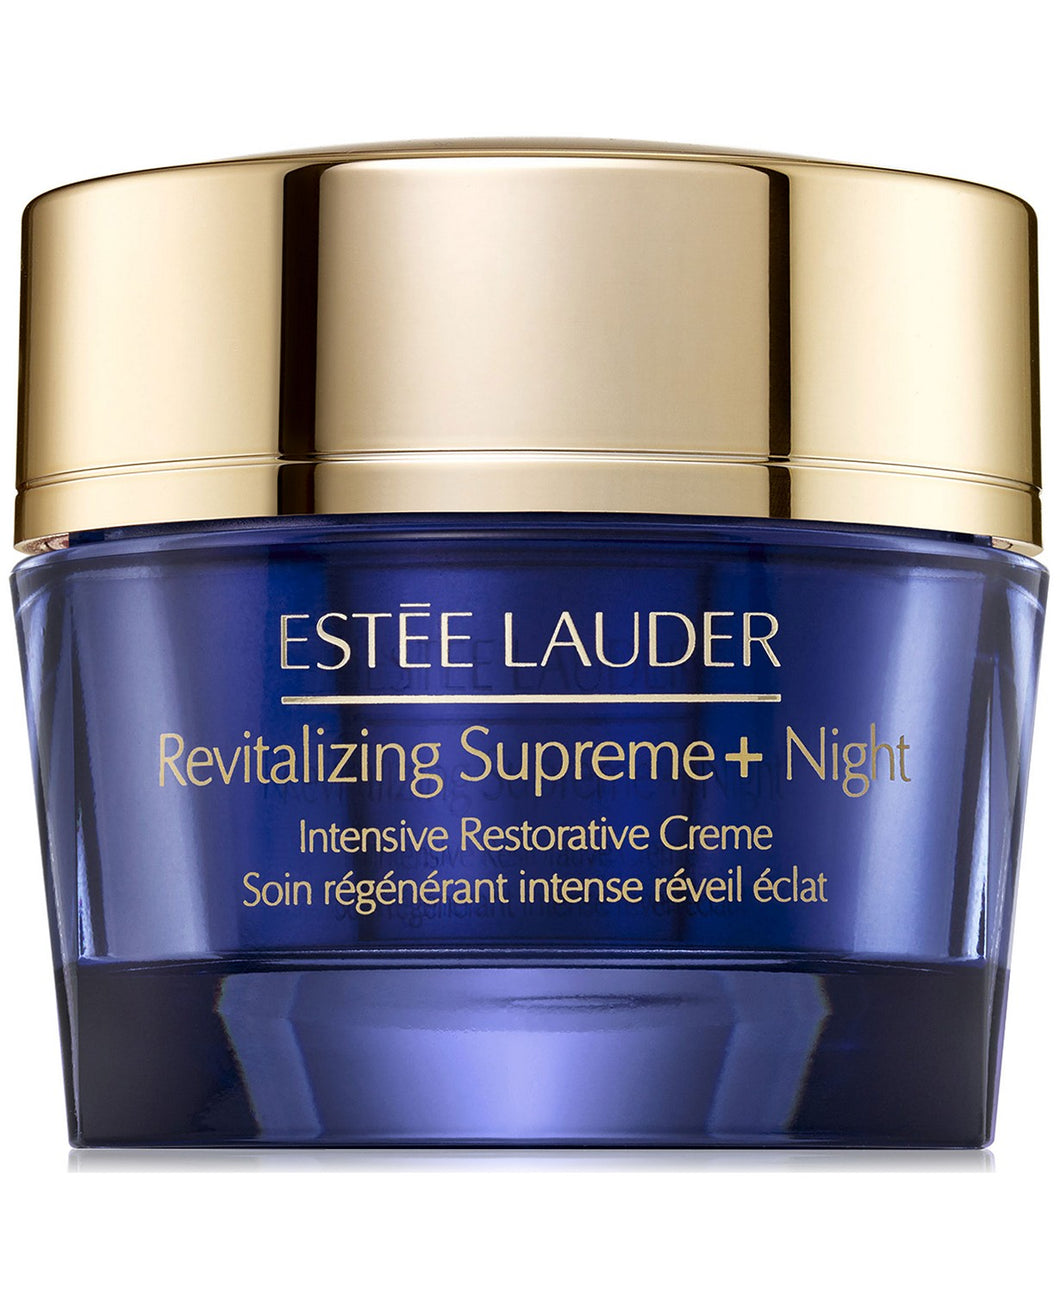 Estee Lauder Revitalizing Supreme+ Night Intensive Restorative Creme, 1.0 oz / 30 ml